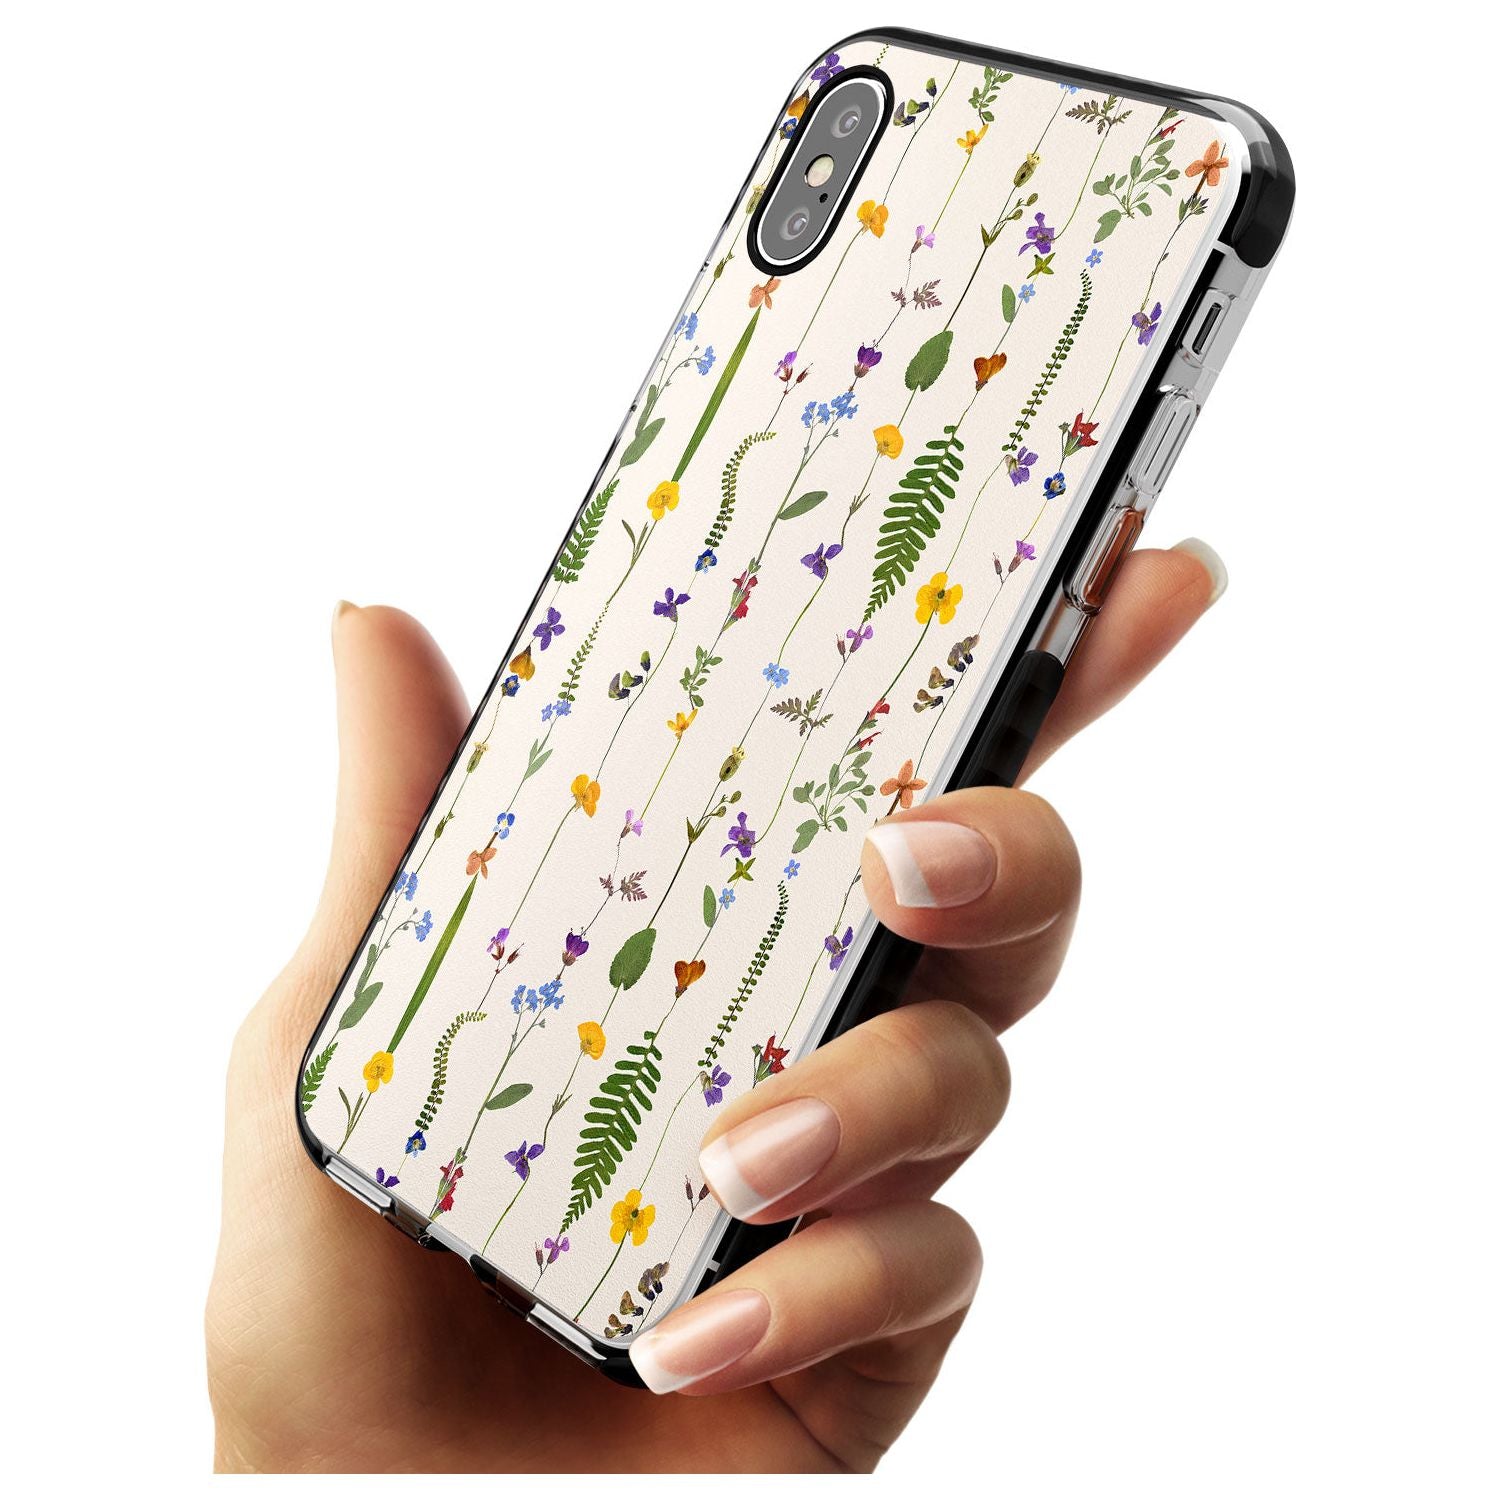 Wildflower Chain Design - Cream Black Impact Phone Case for iPhone X XS Max XR